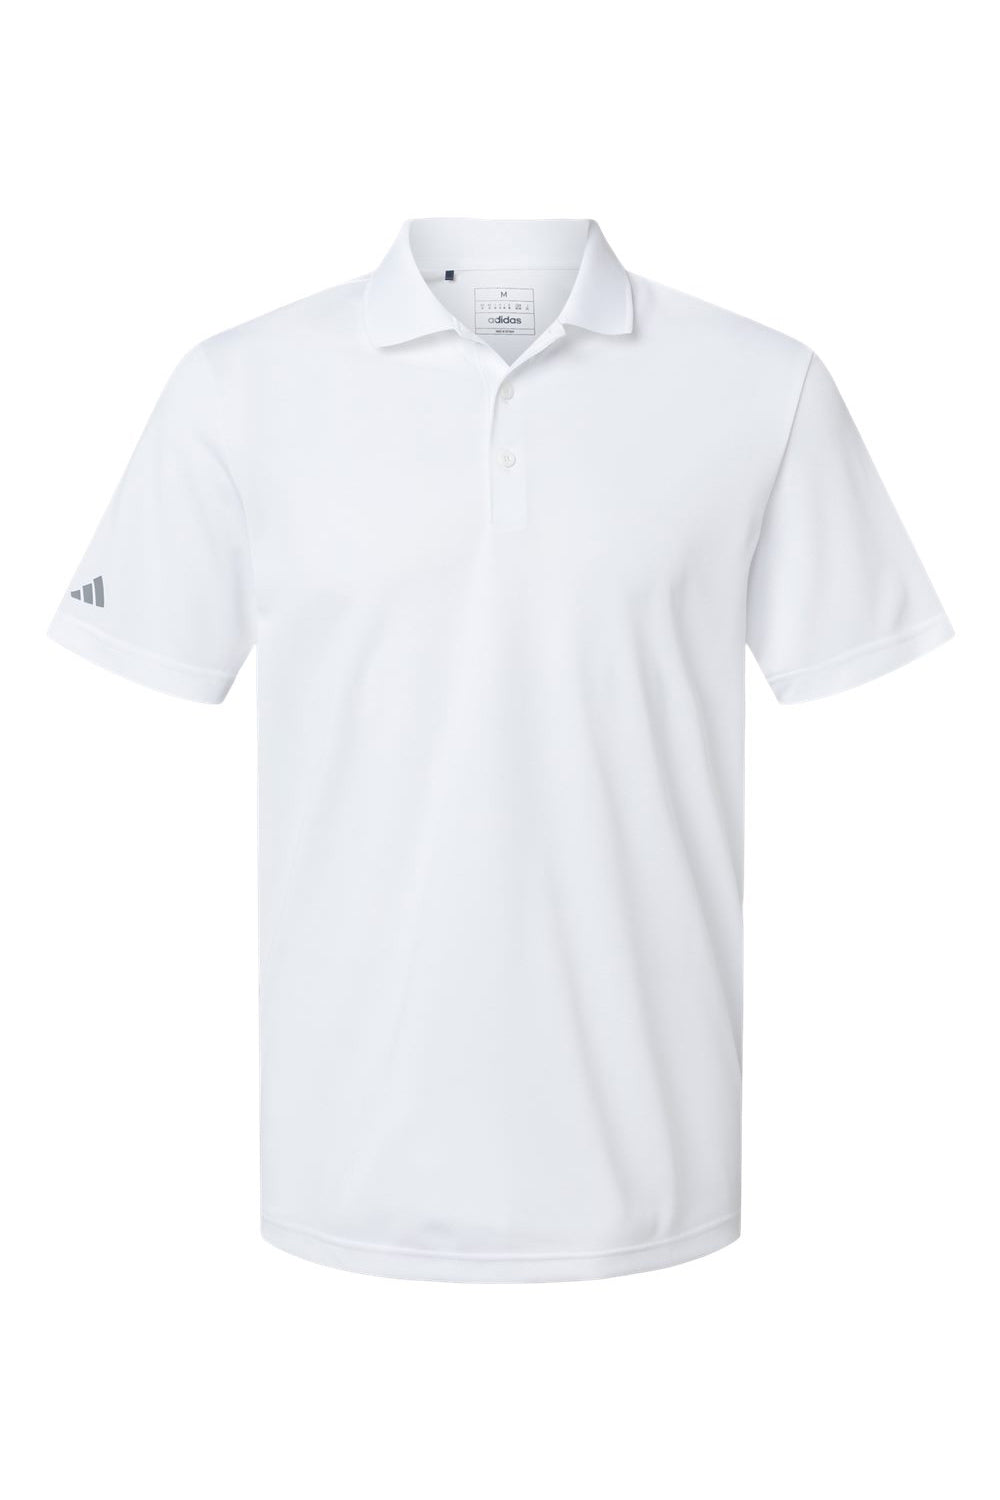 Adidas A430 Mens Basic Short Sleeve Polo Shirt White Flat Front